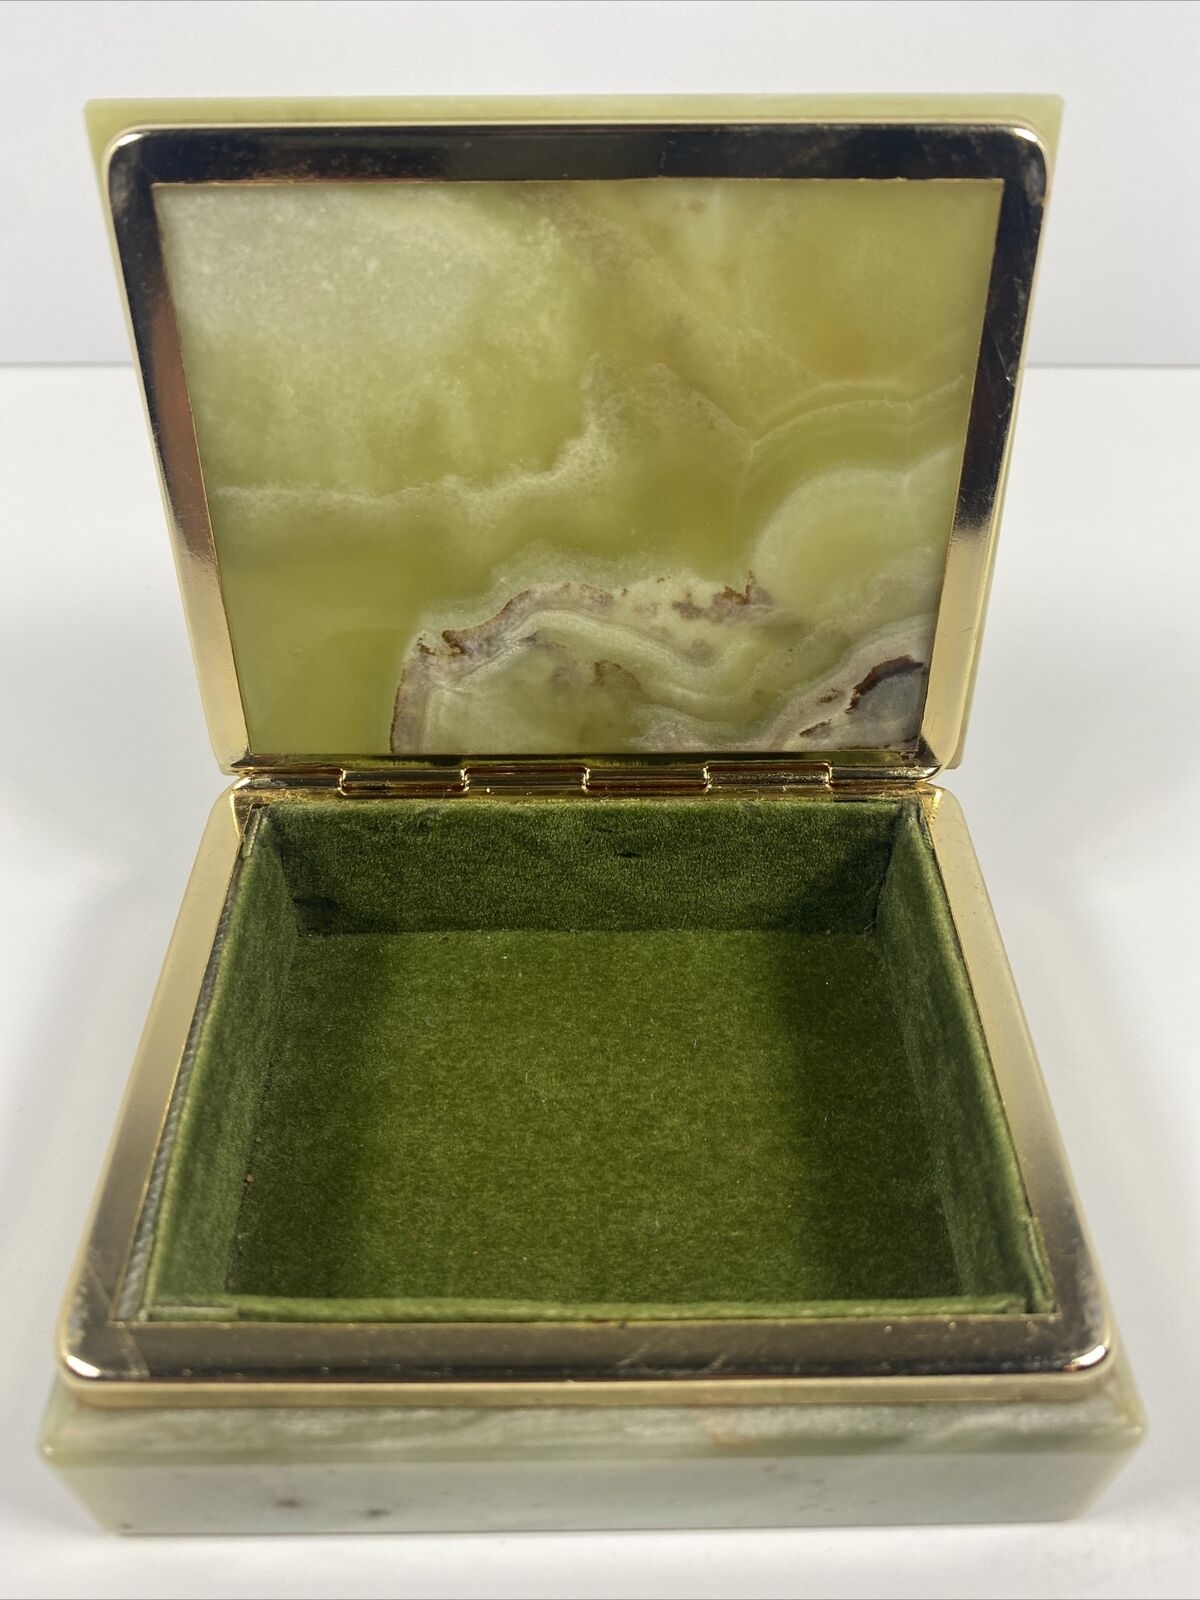 Vintage 1970s Italian Jade Jewelry Box / Trinket Box (1960-1970s) Retro